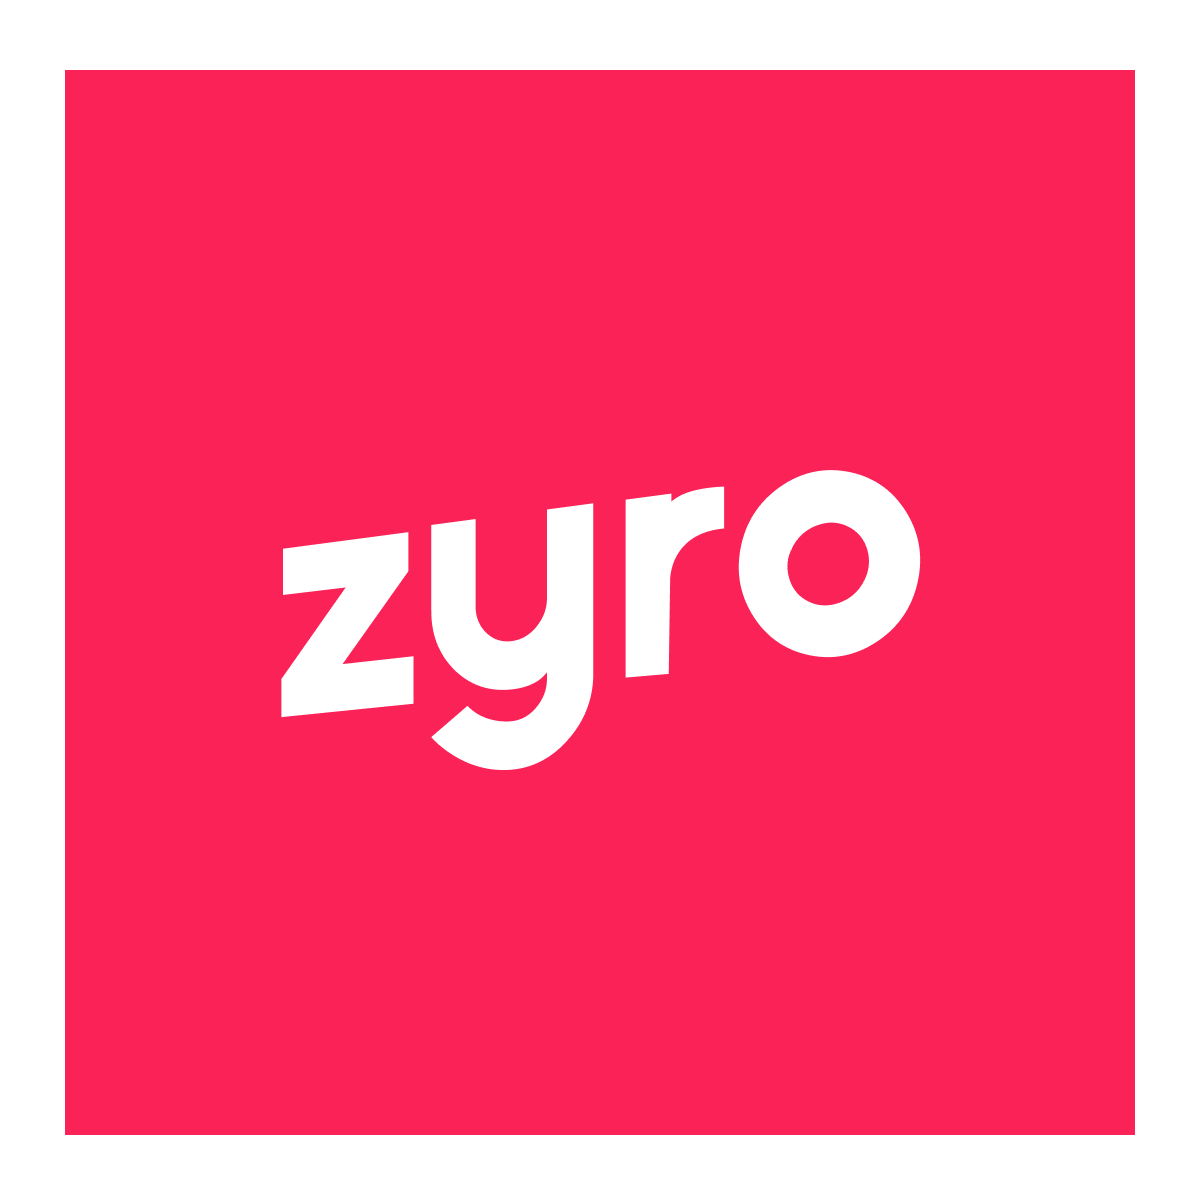 Zyro - Wikipedia